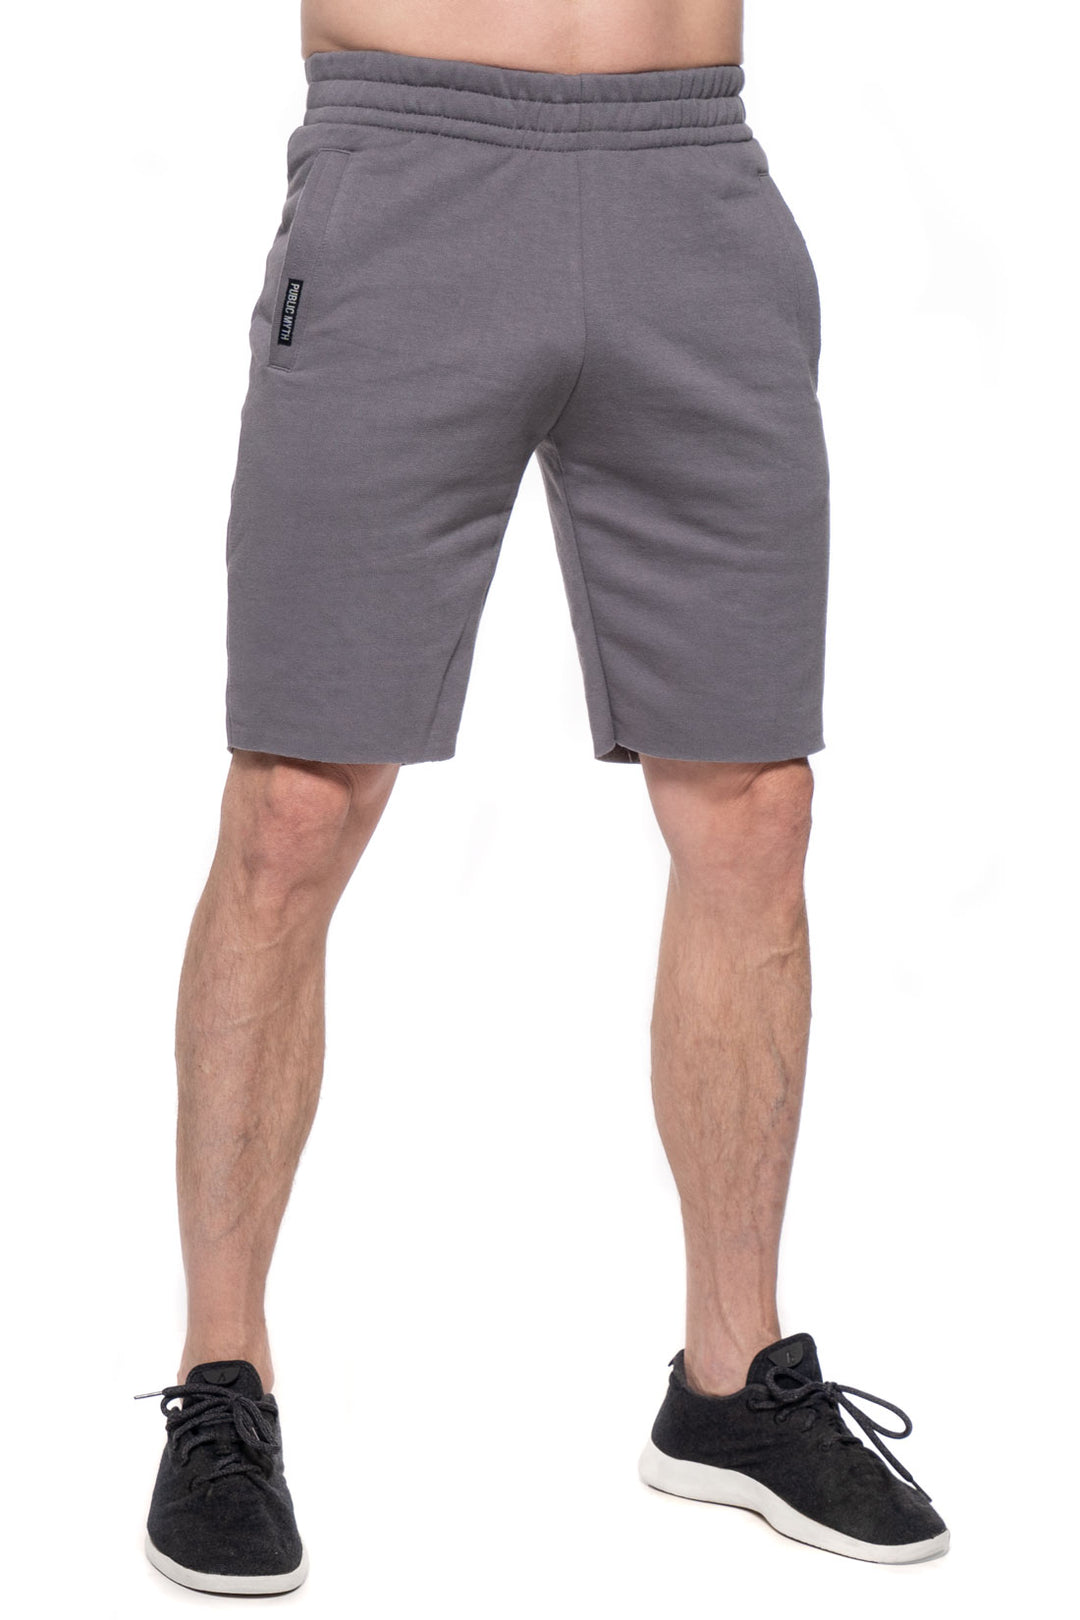 gray men's organic cotton shorts